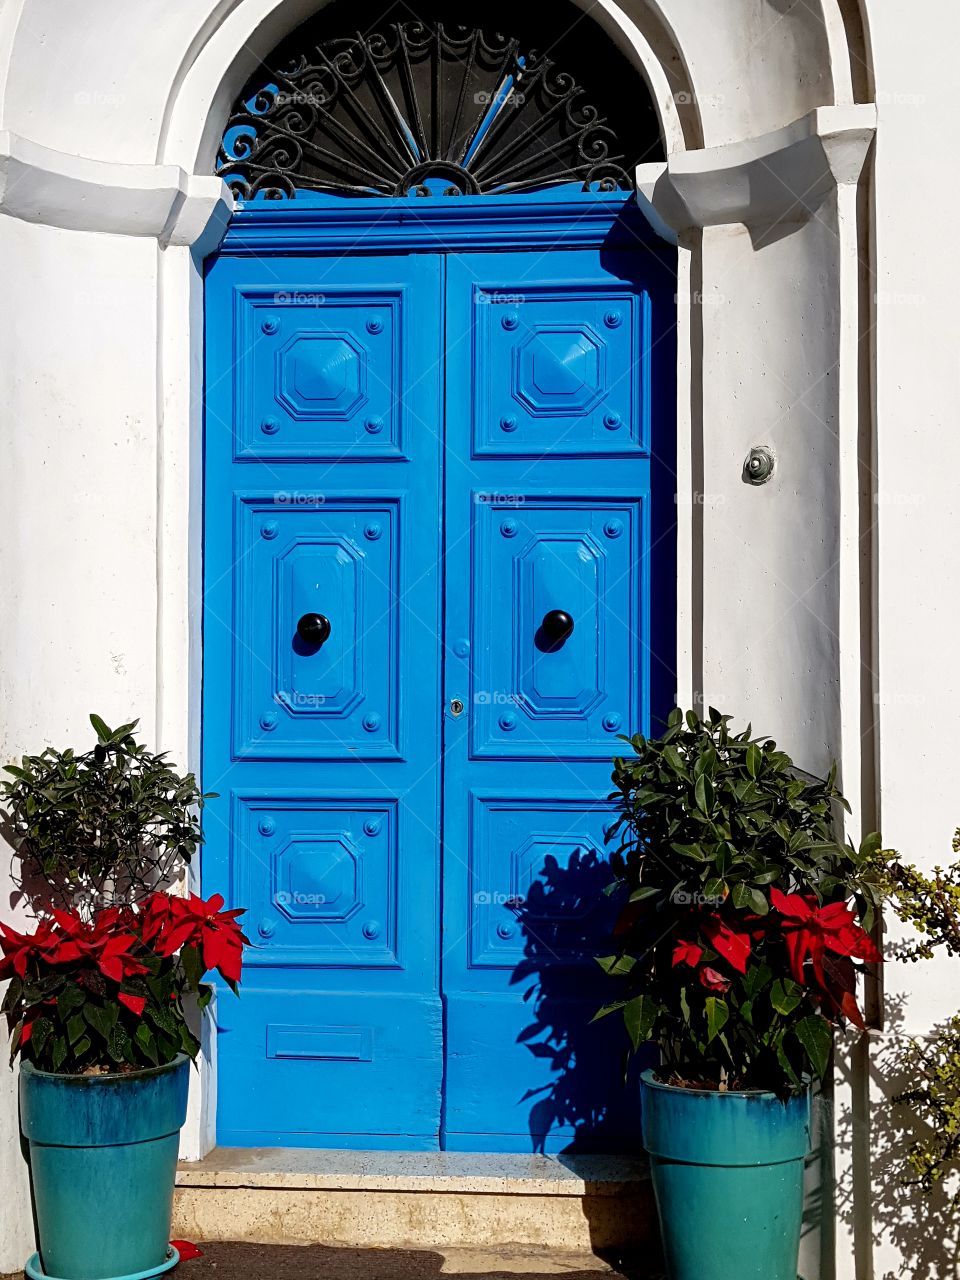 perfectly symmetrical blue door